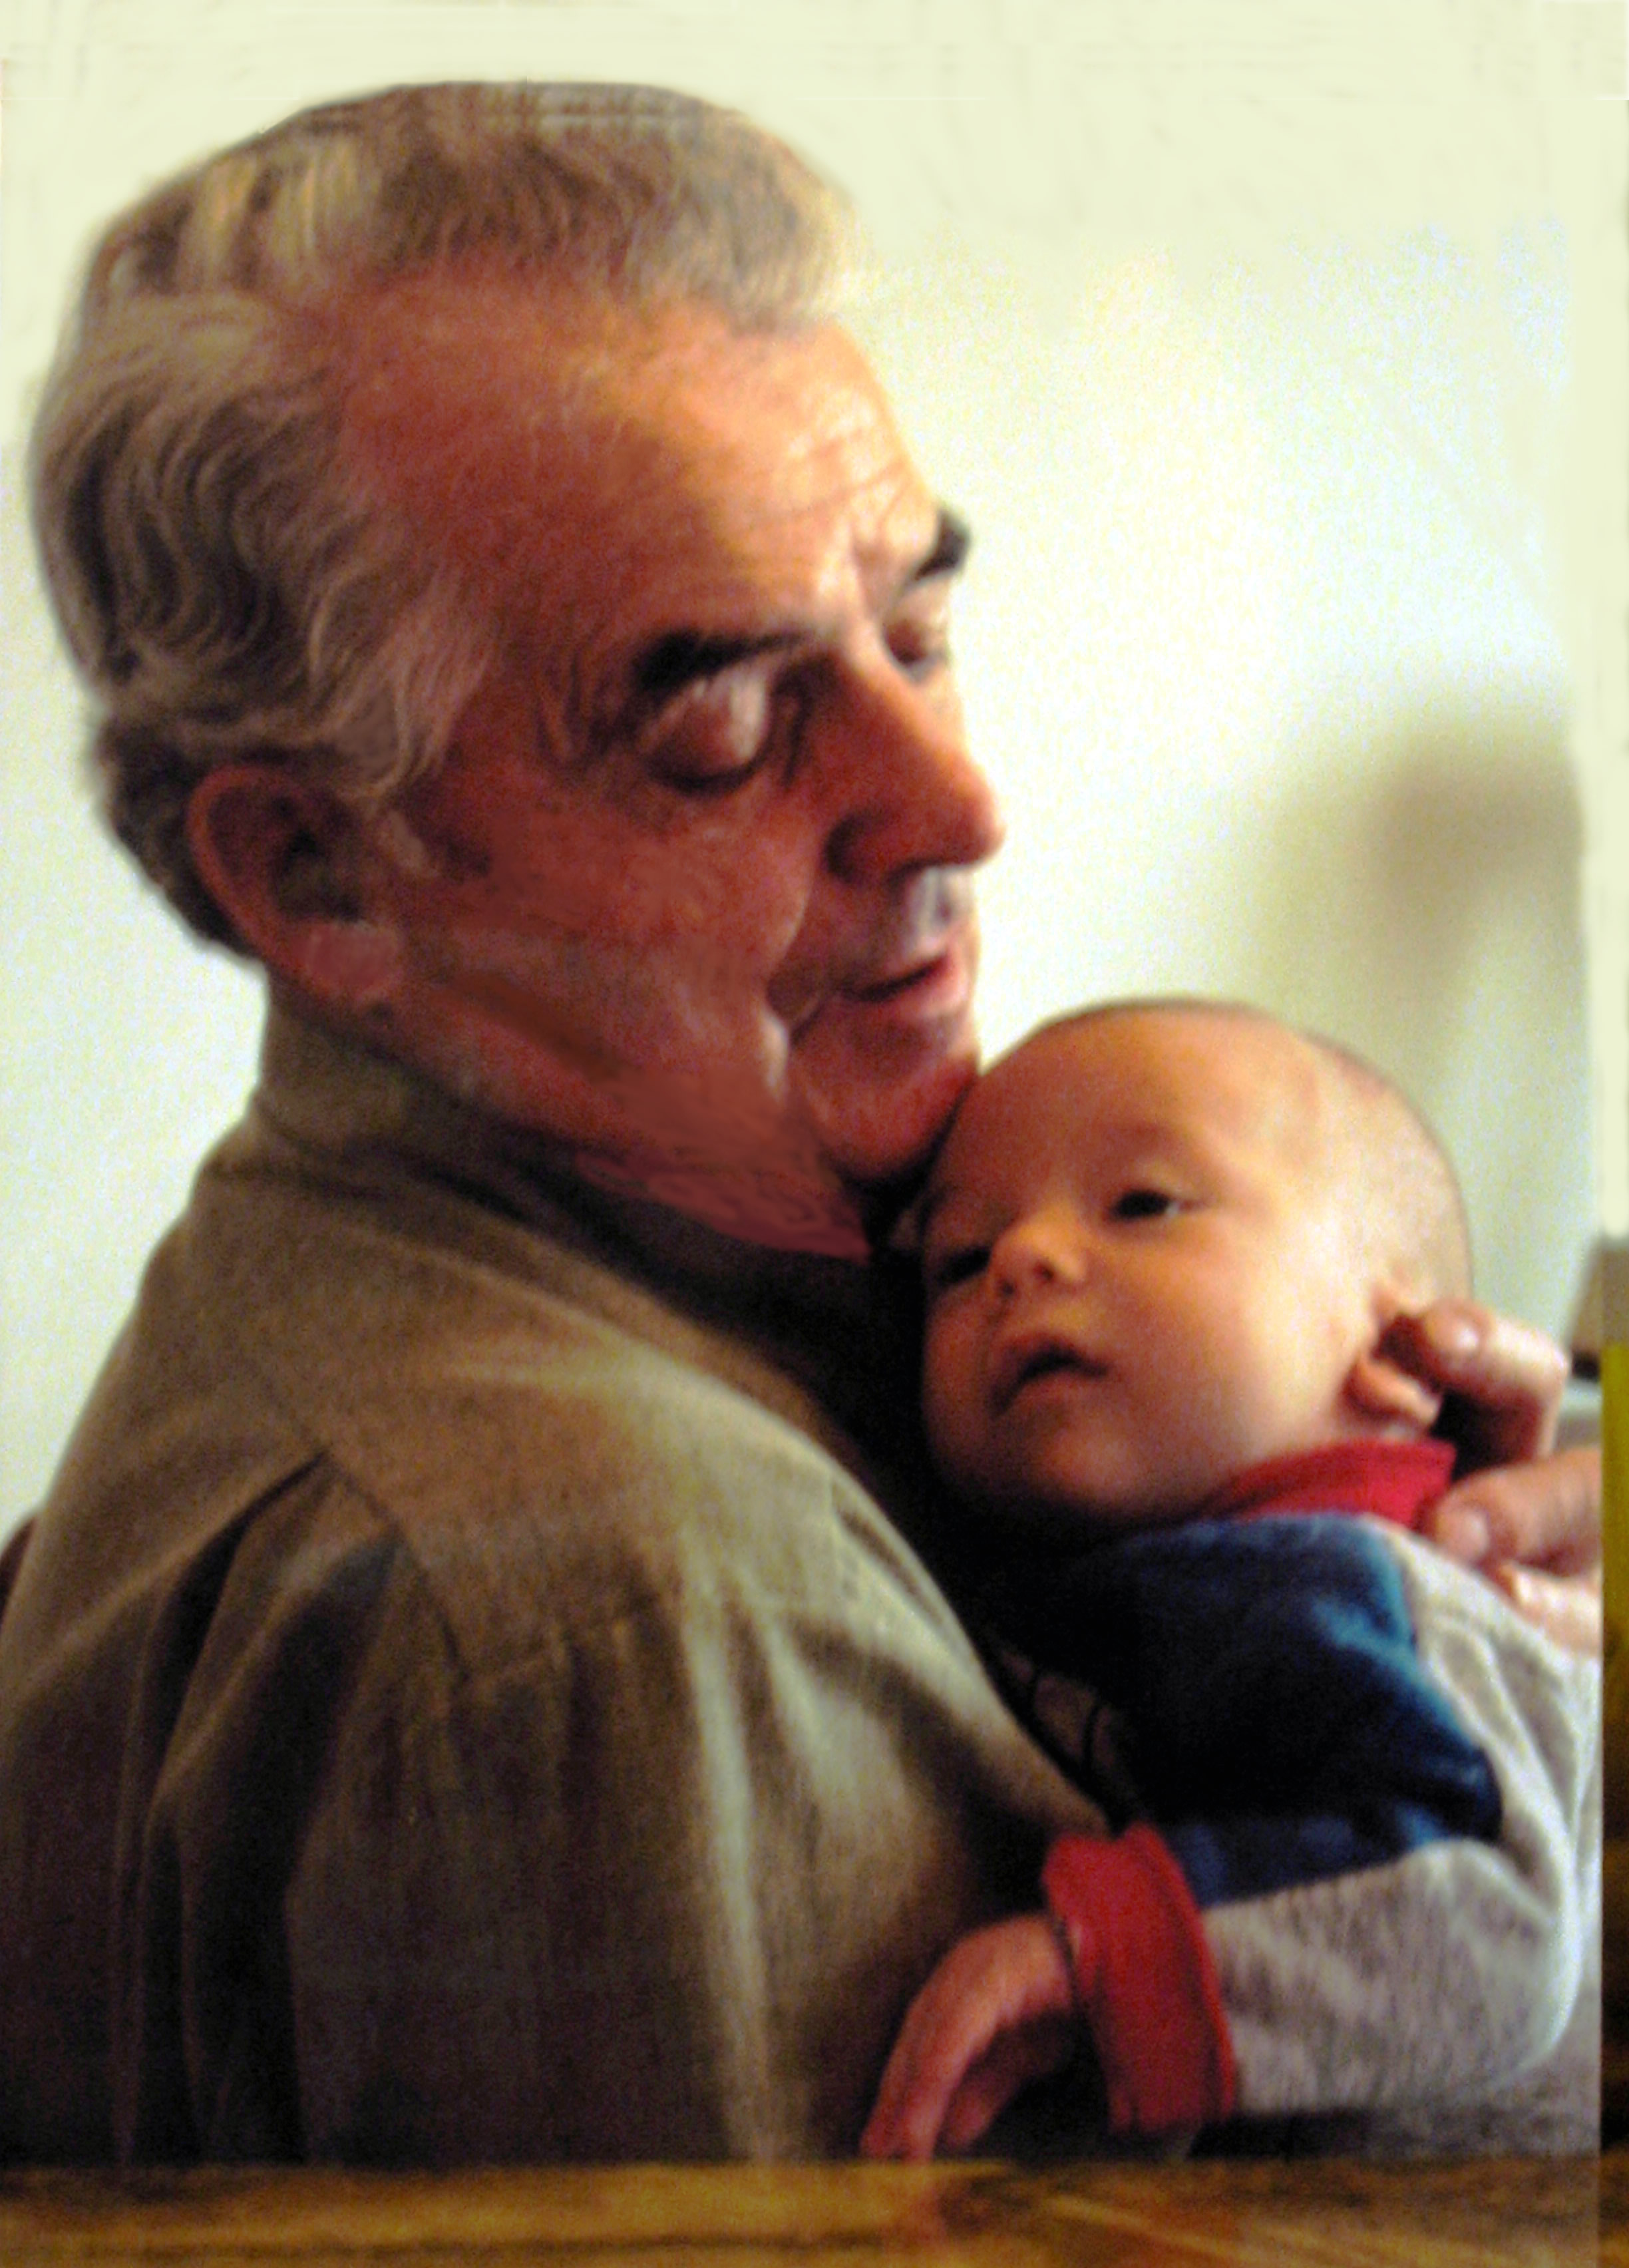 Walter holding baby Lukas